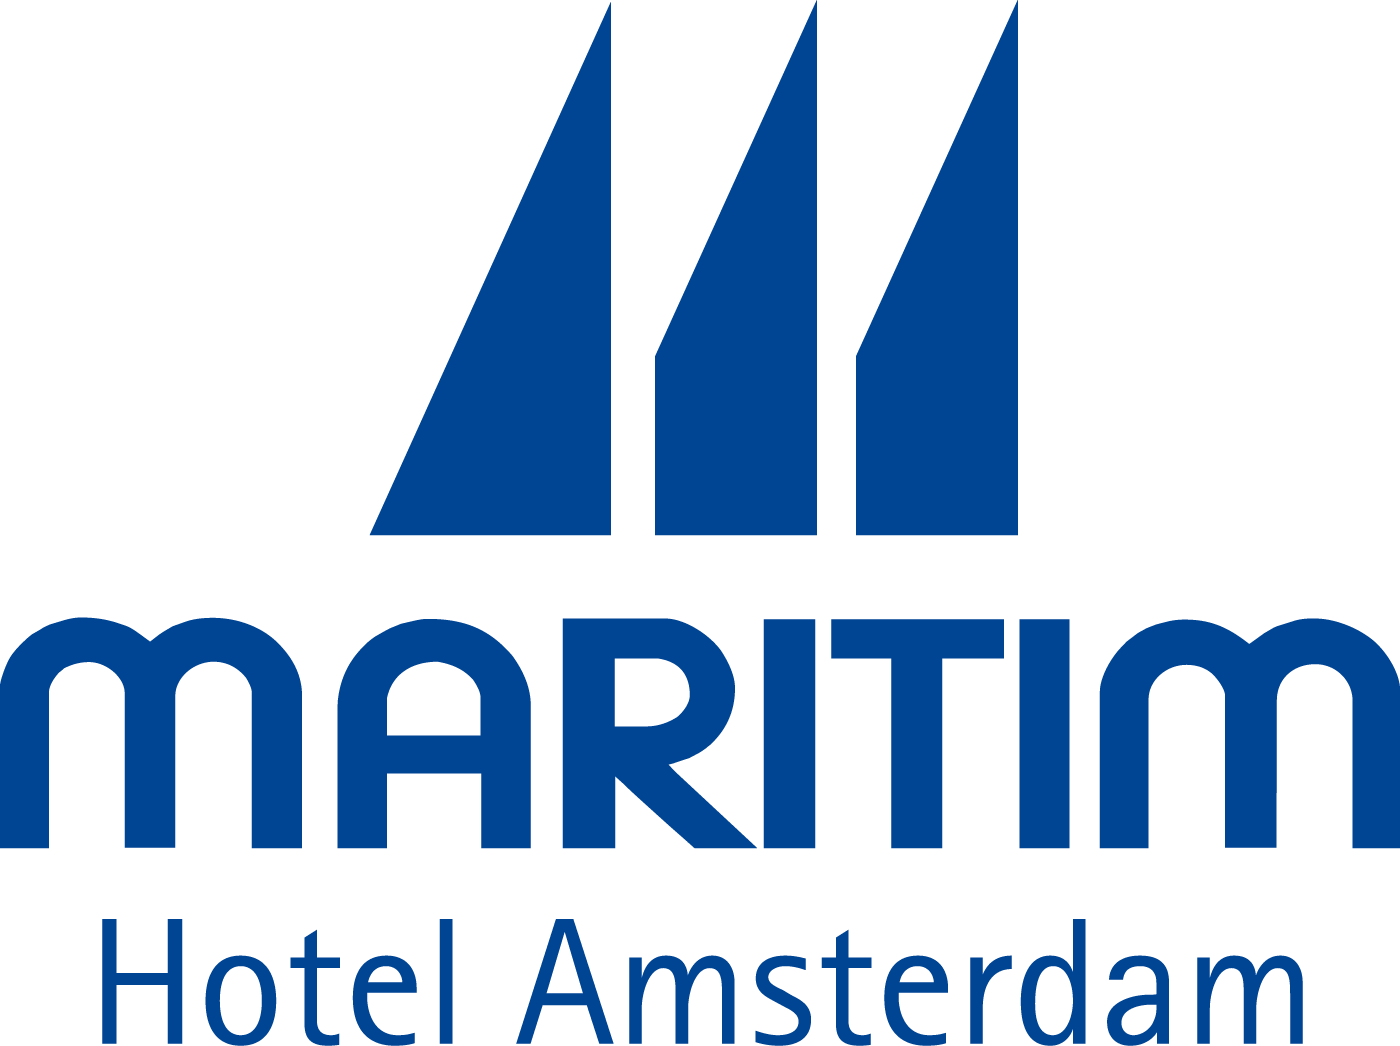 Maritim Hotel Amsterdam